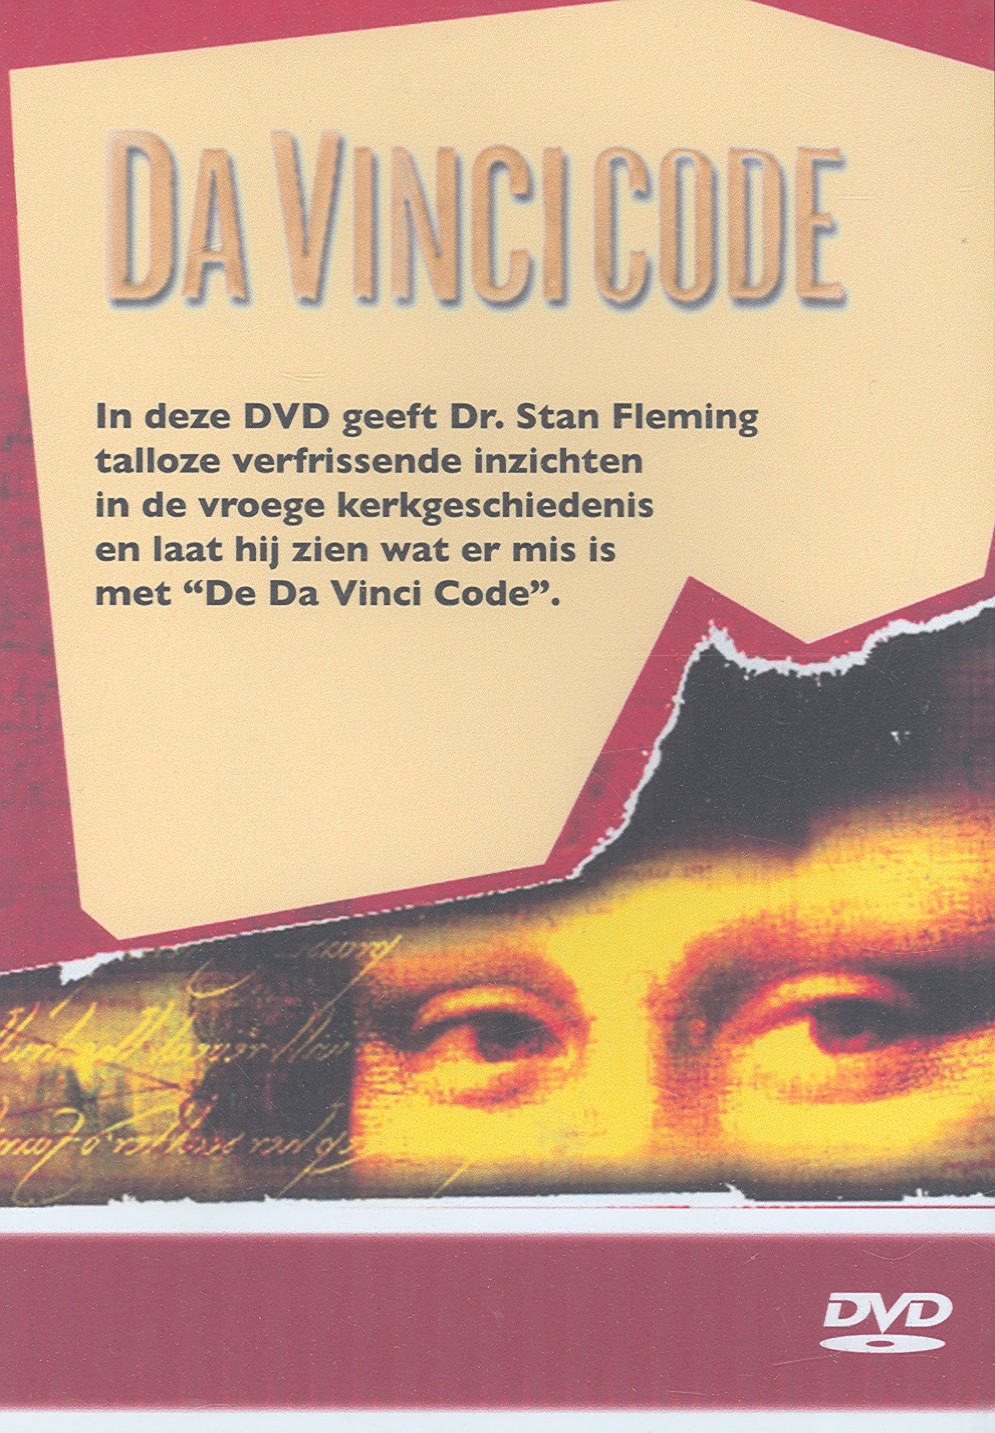 Dvd da vinci code